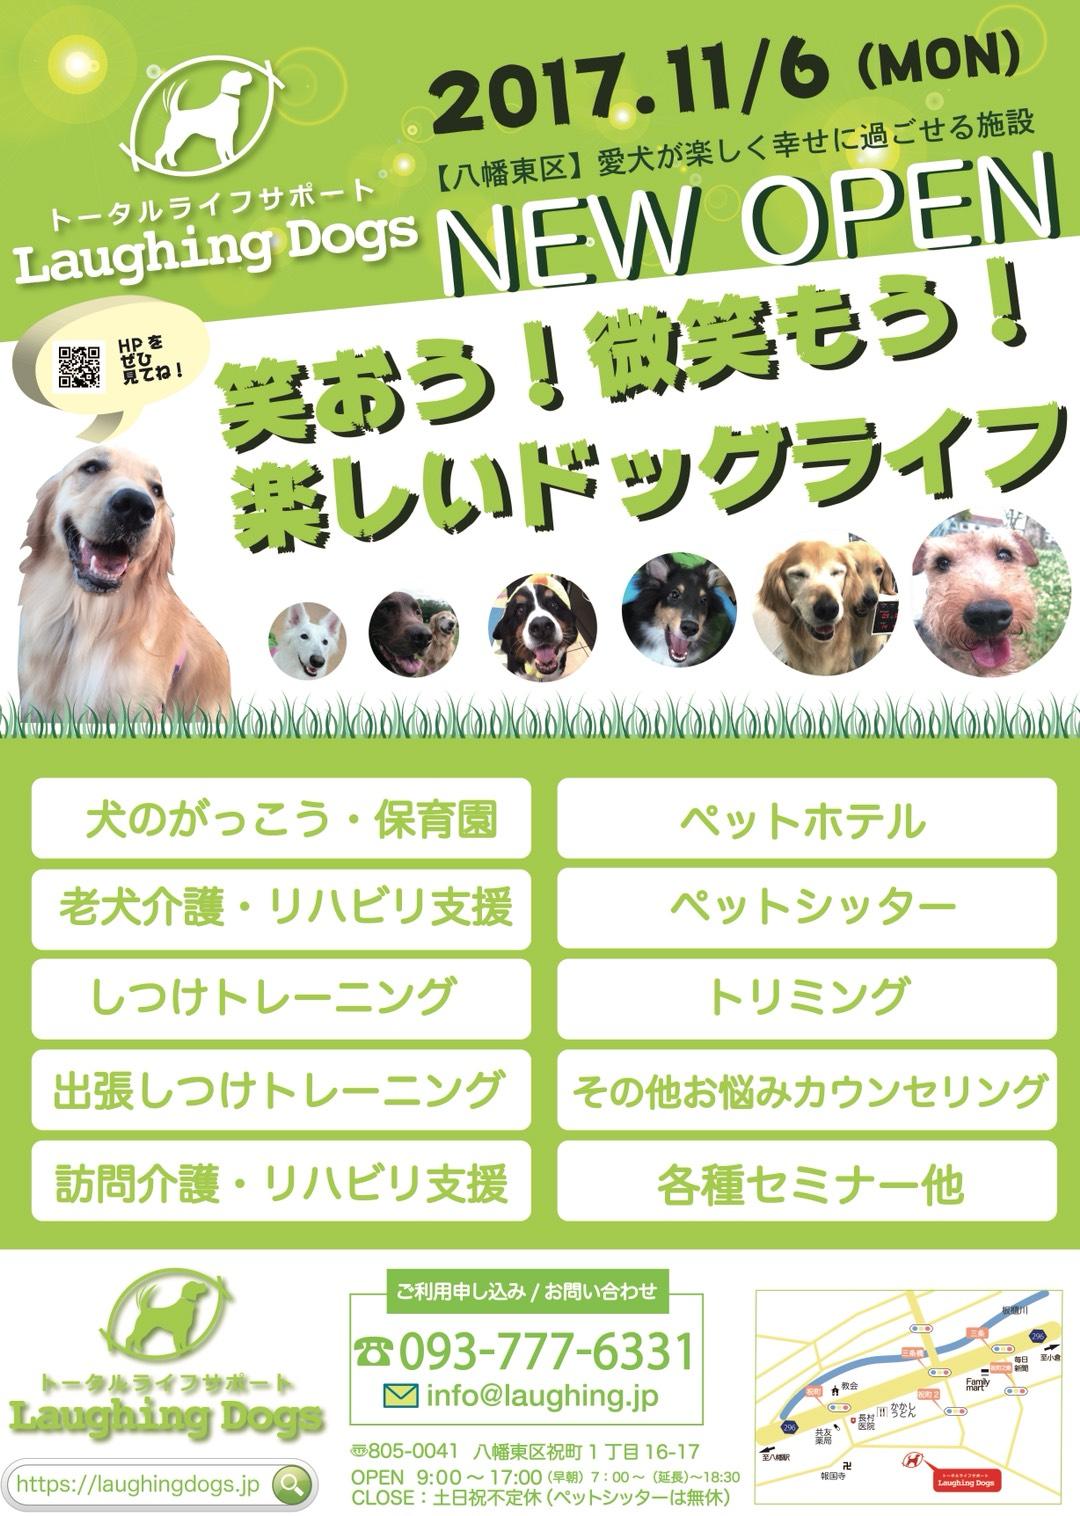 Tls Laughing Dogs 犬の保育園 スタッフ 募集 動物病院 ペット業界の求人転職サイト ペットリクルート